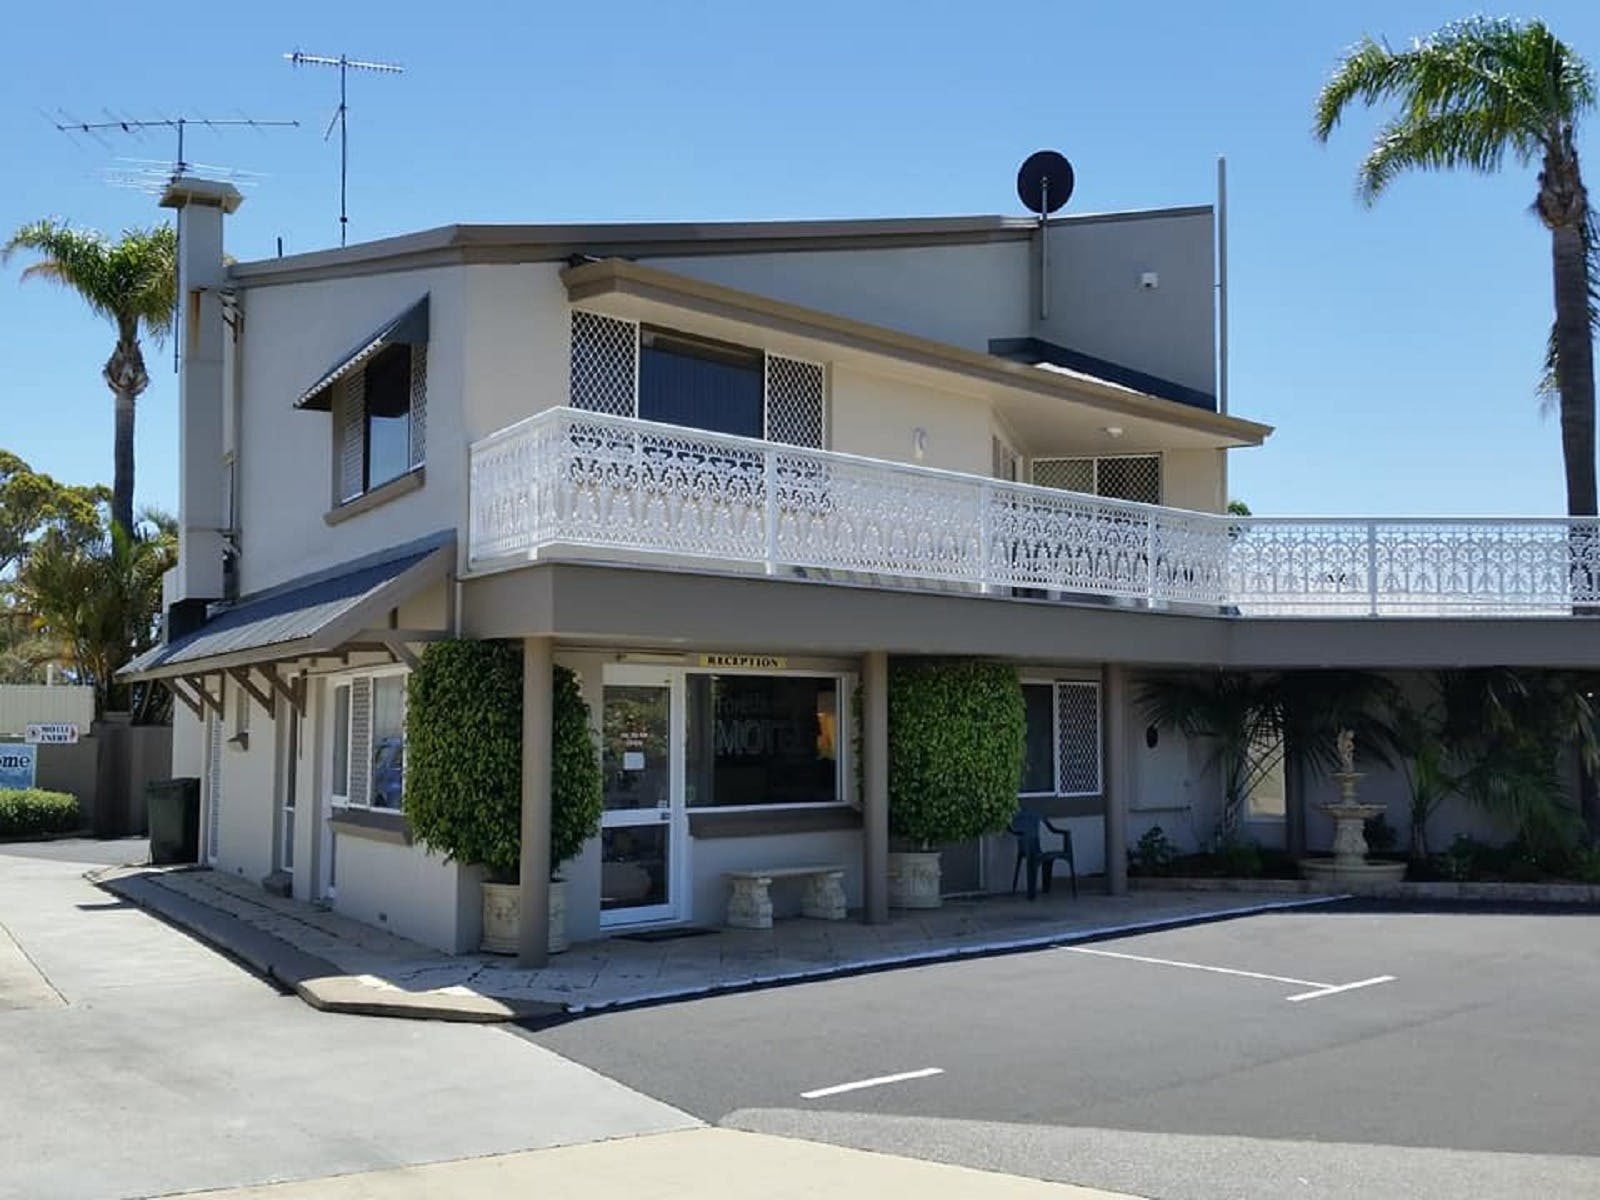 Foreshore Motel, Mandurah, Western Australia